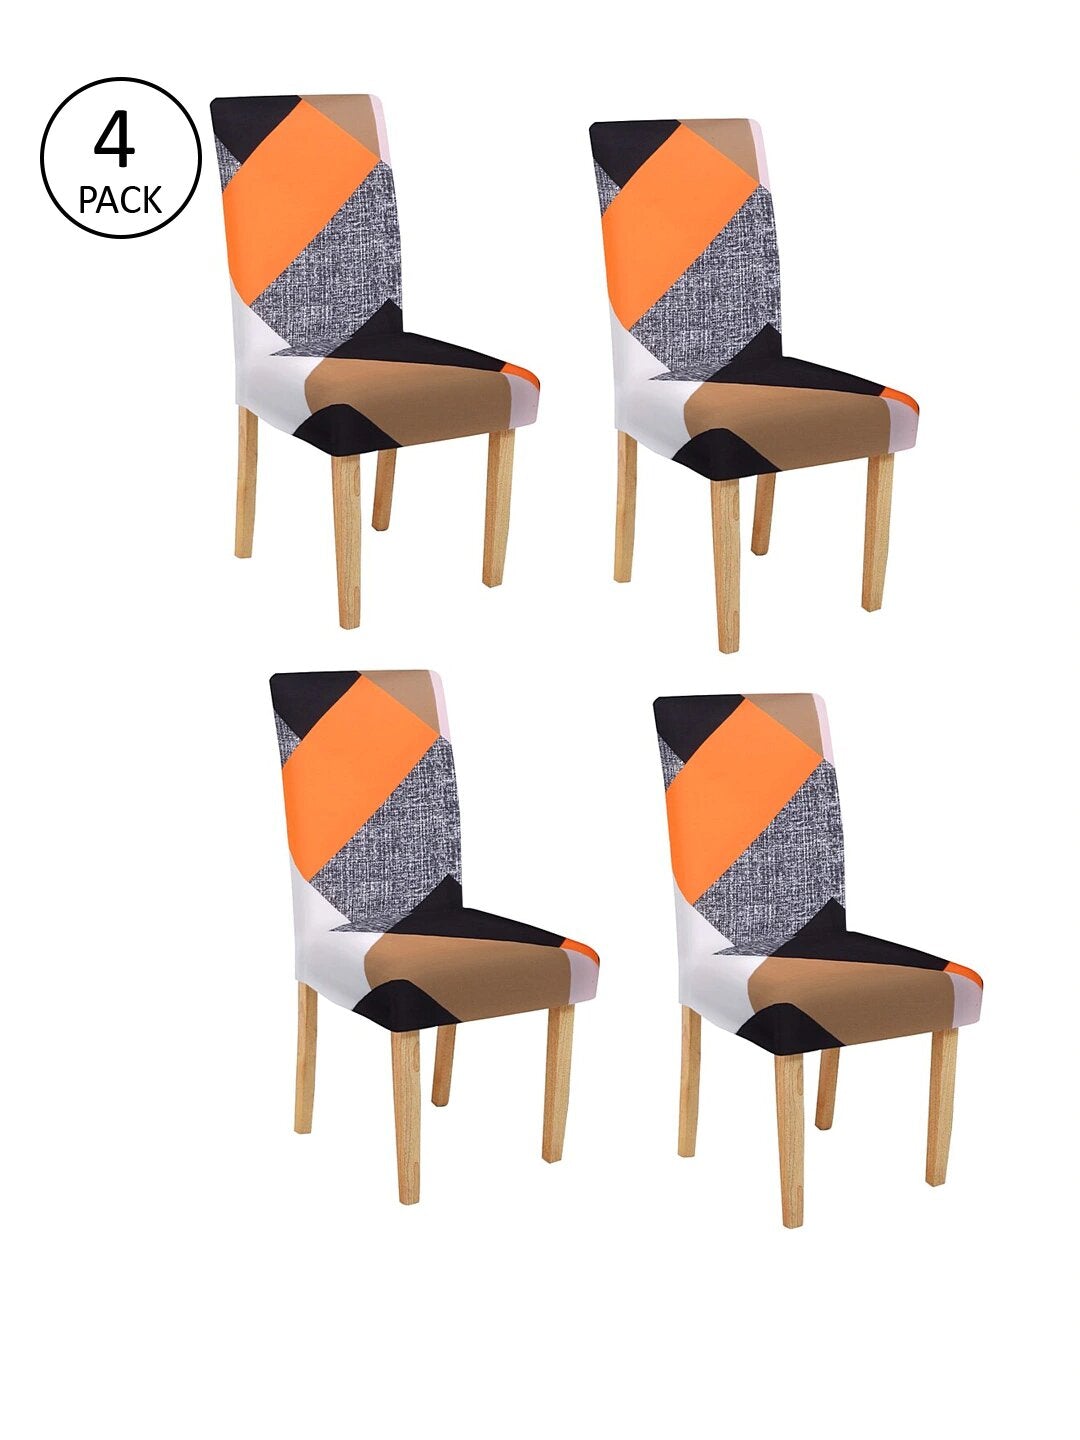 Prism Orange Magic Universal Elastic Chair Covers Set of 6